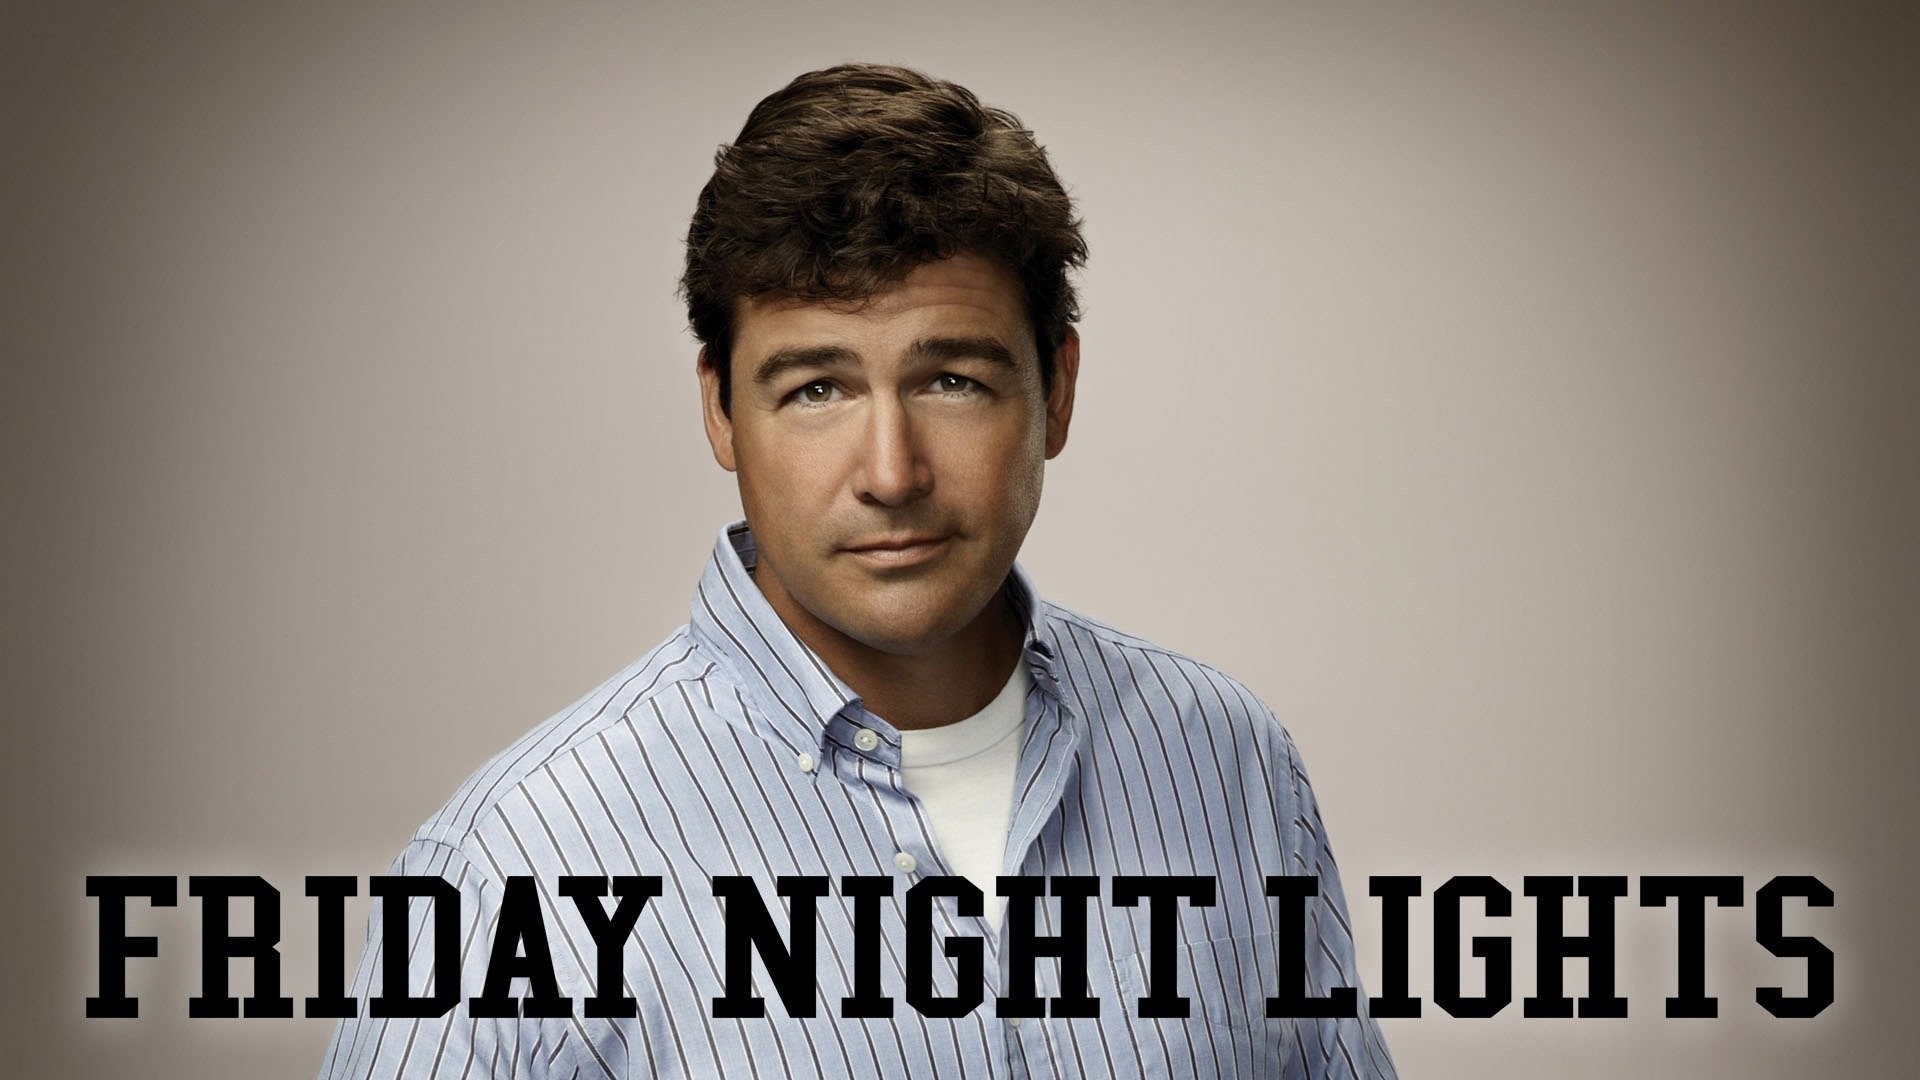 Friday Night Lights - Rotten Tomatoes